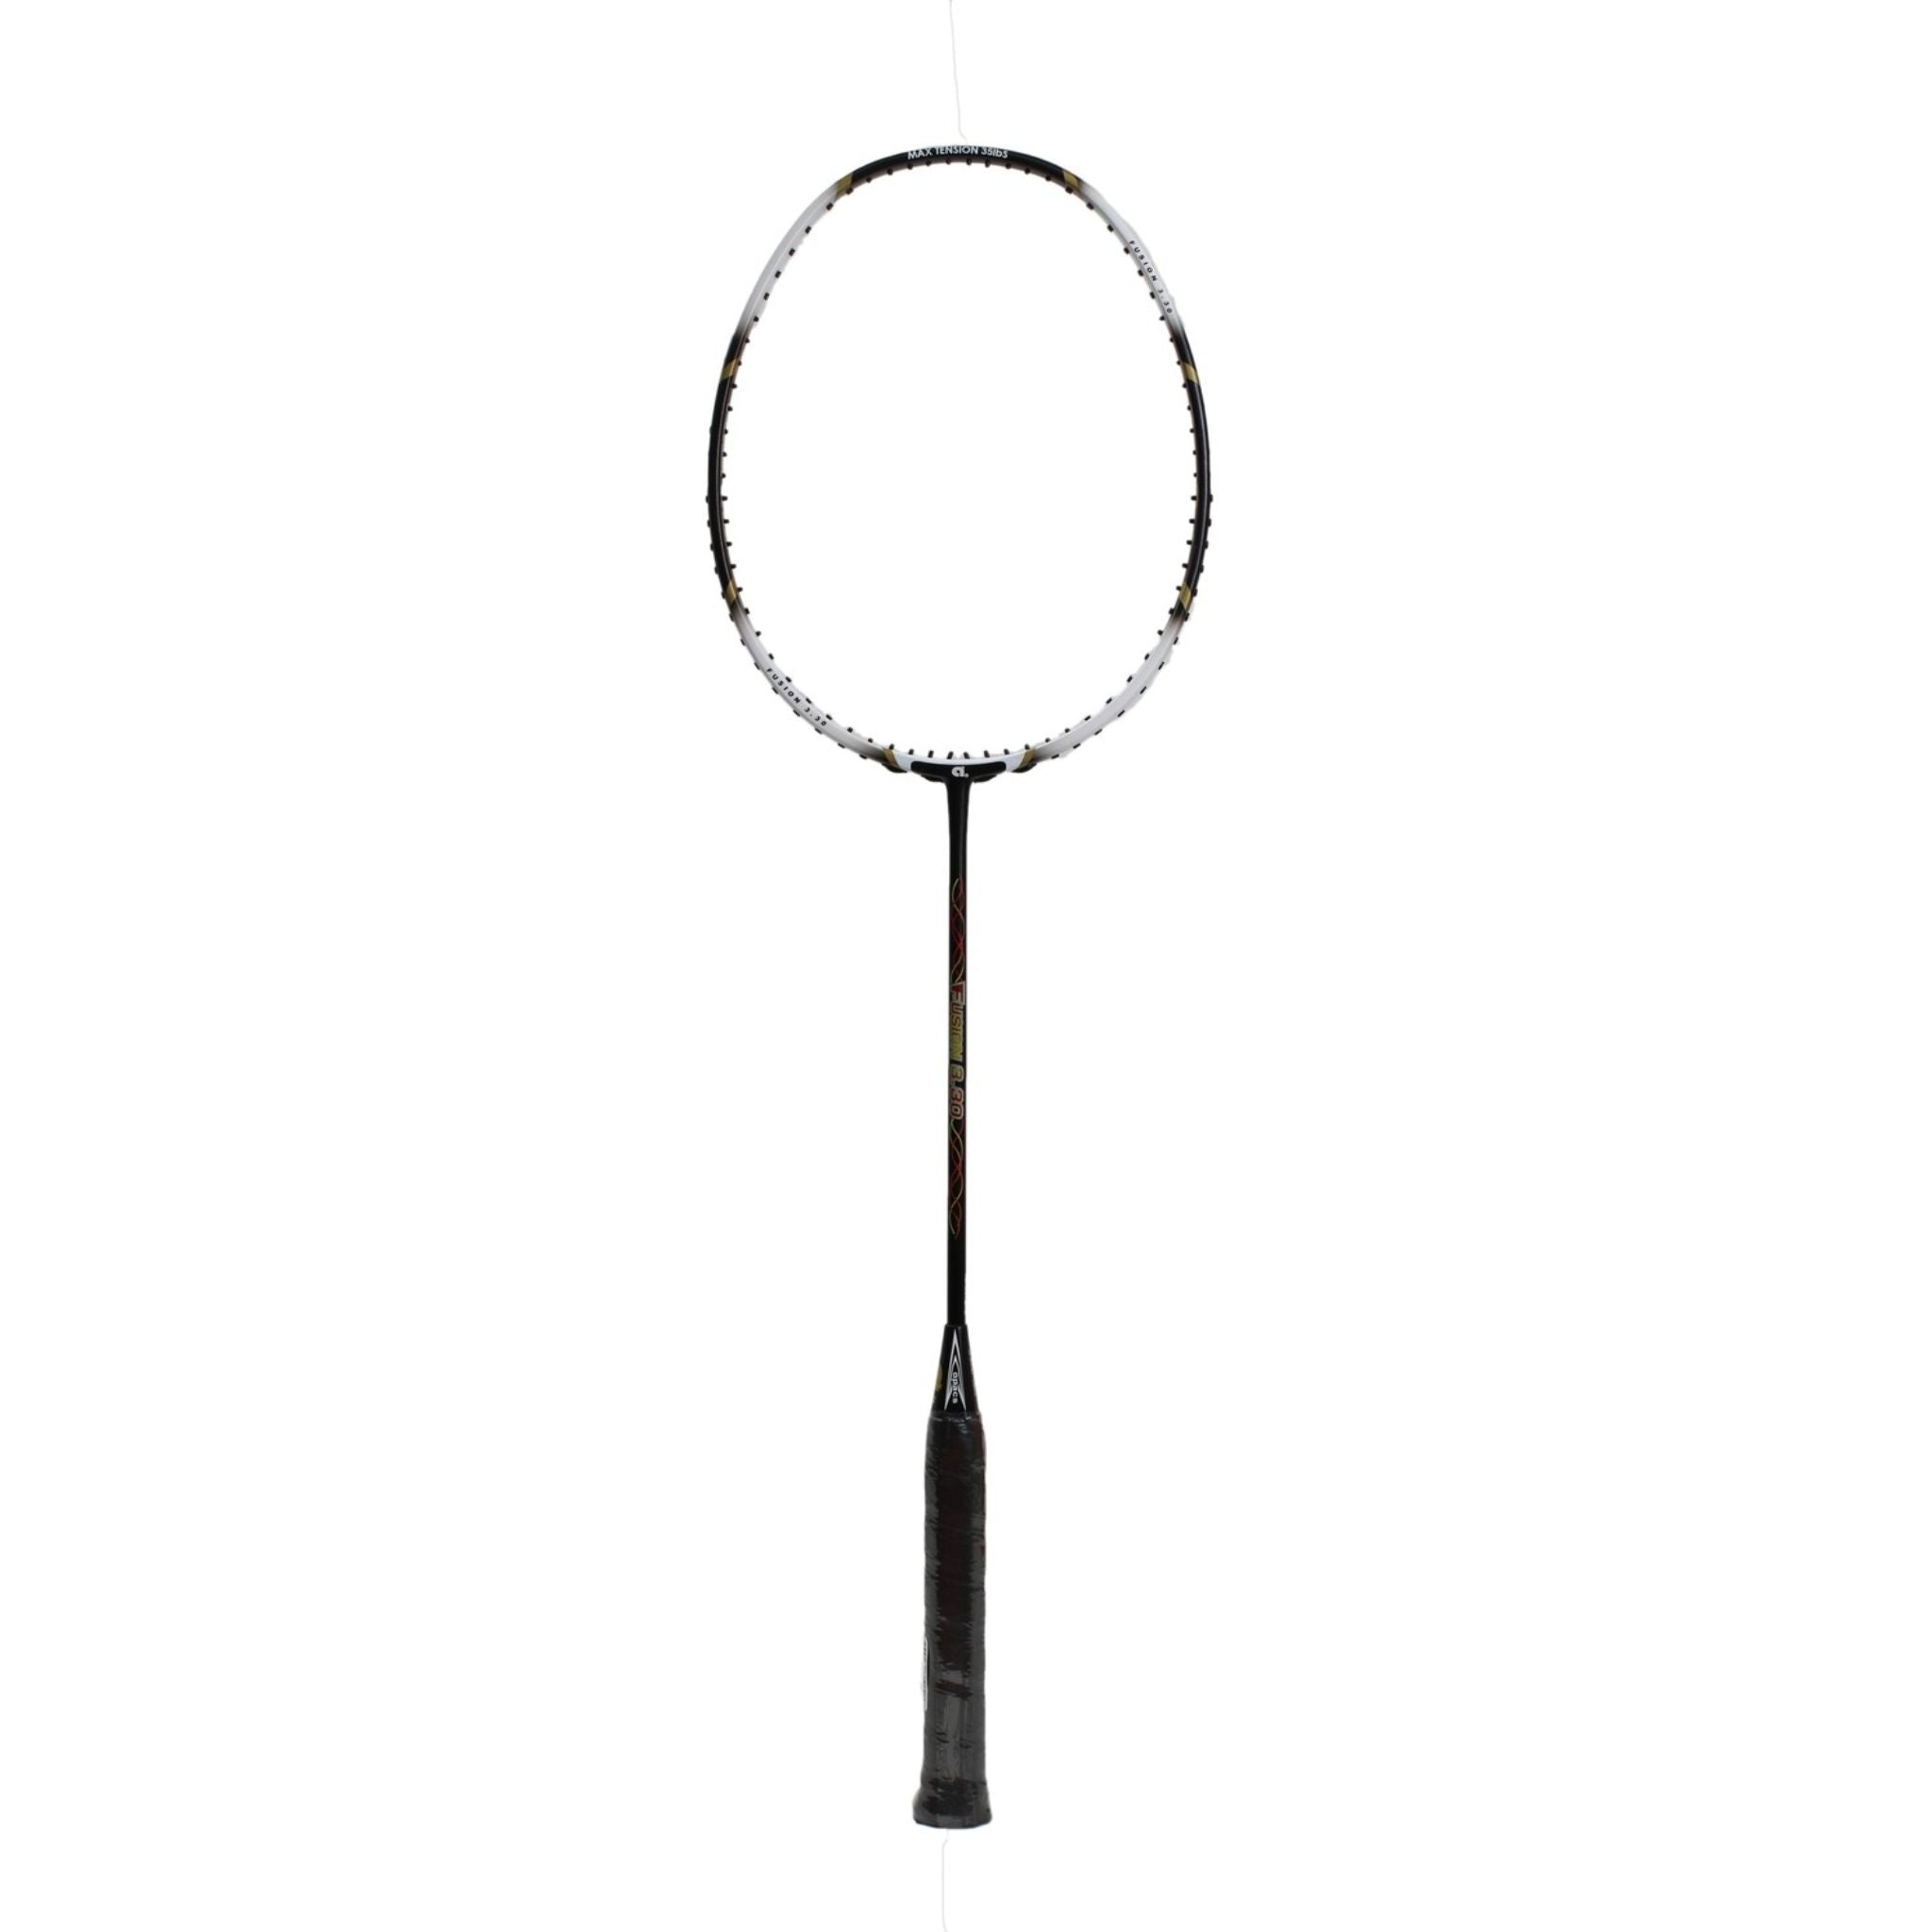 APACS Fusion 3.30 Badminton Racket